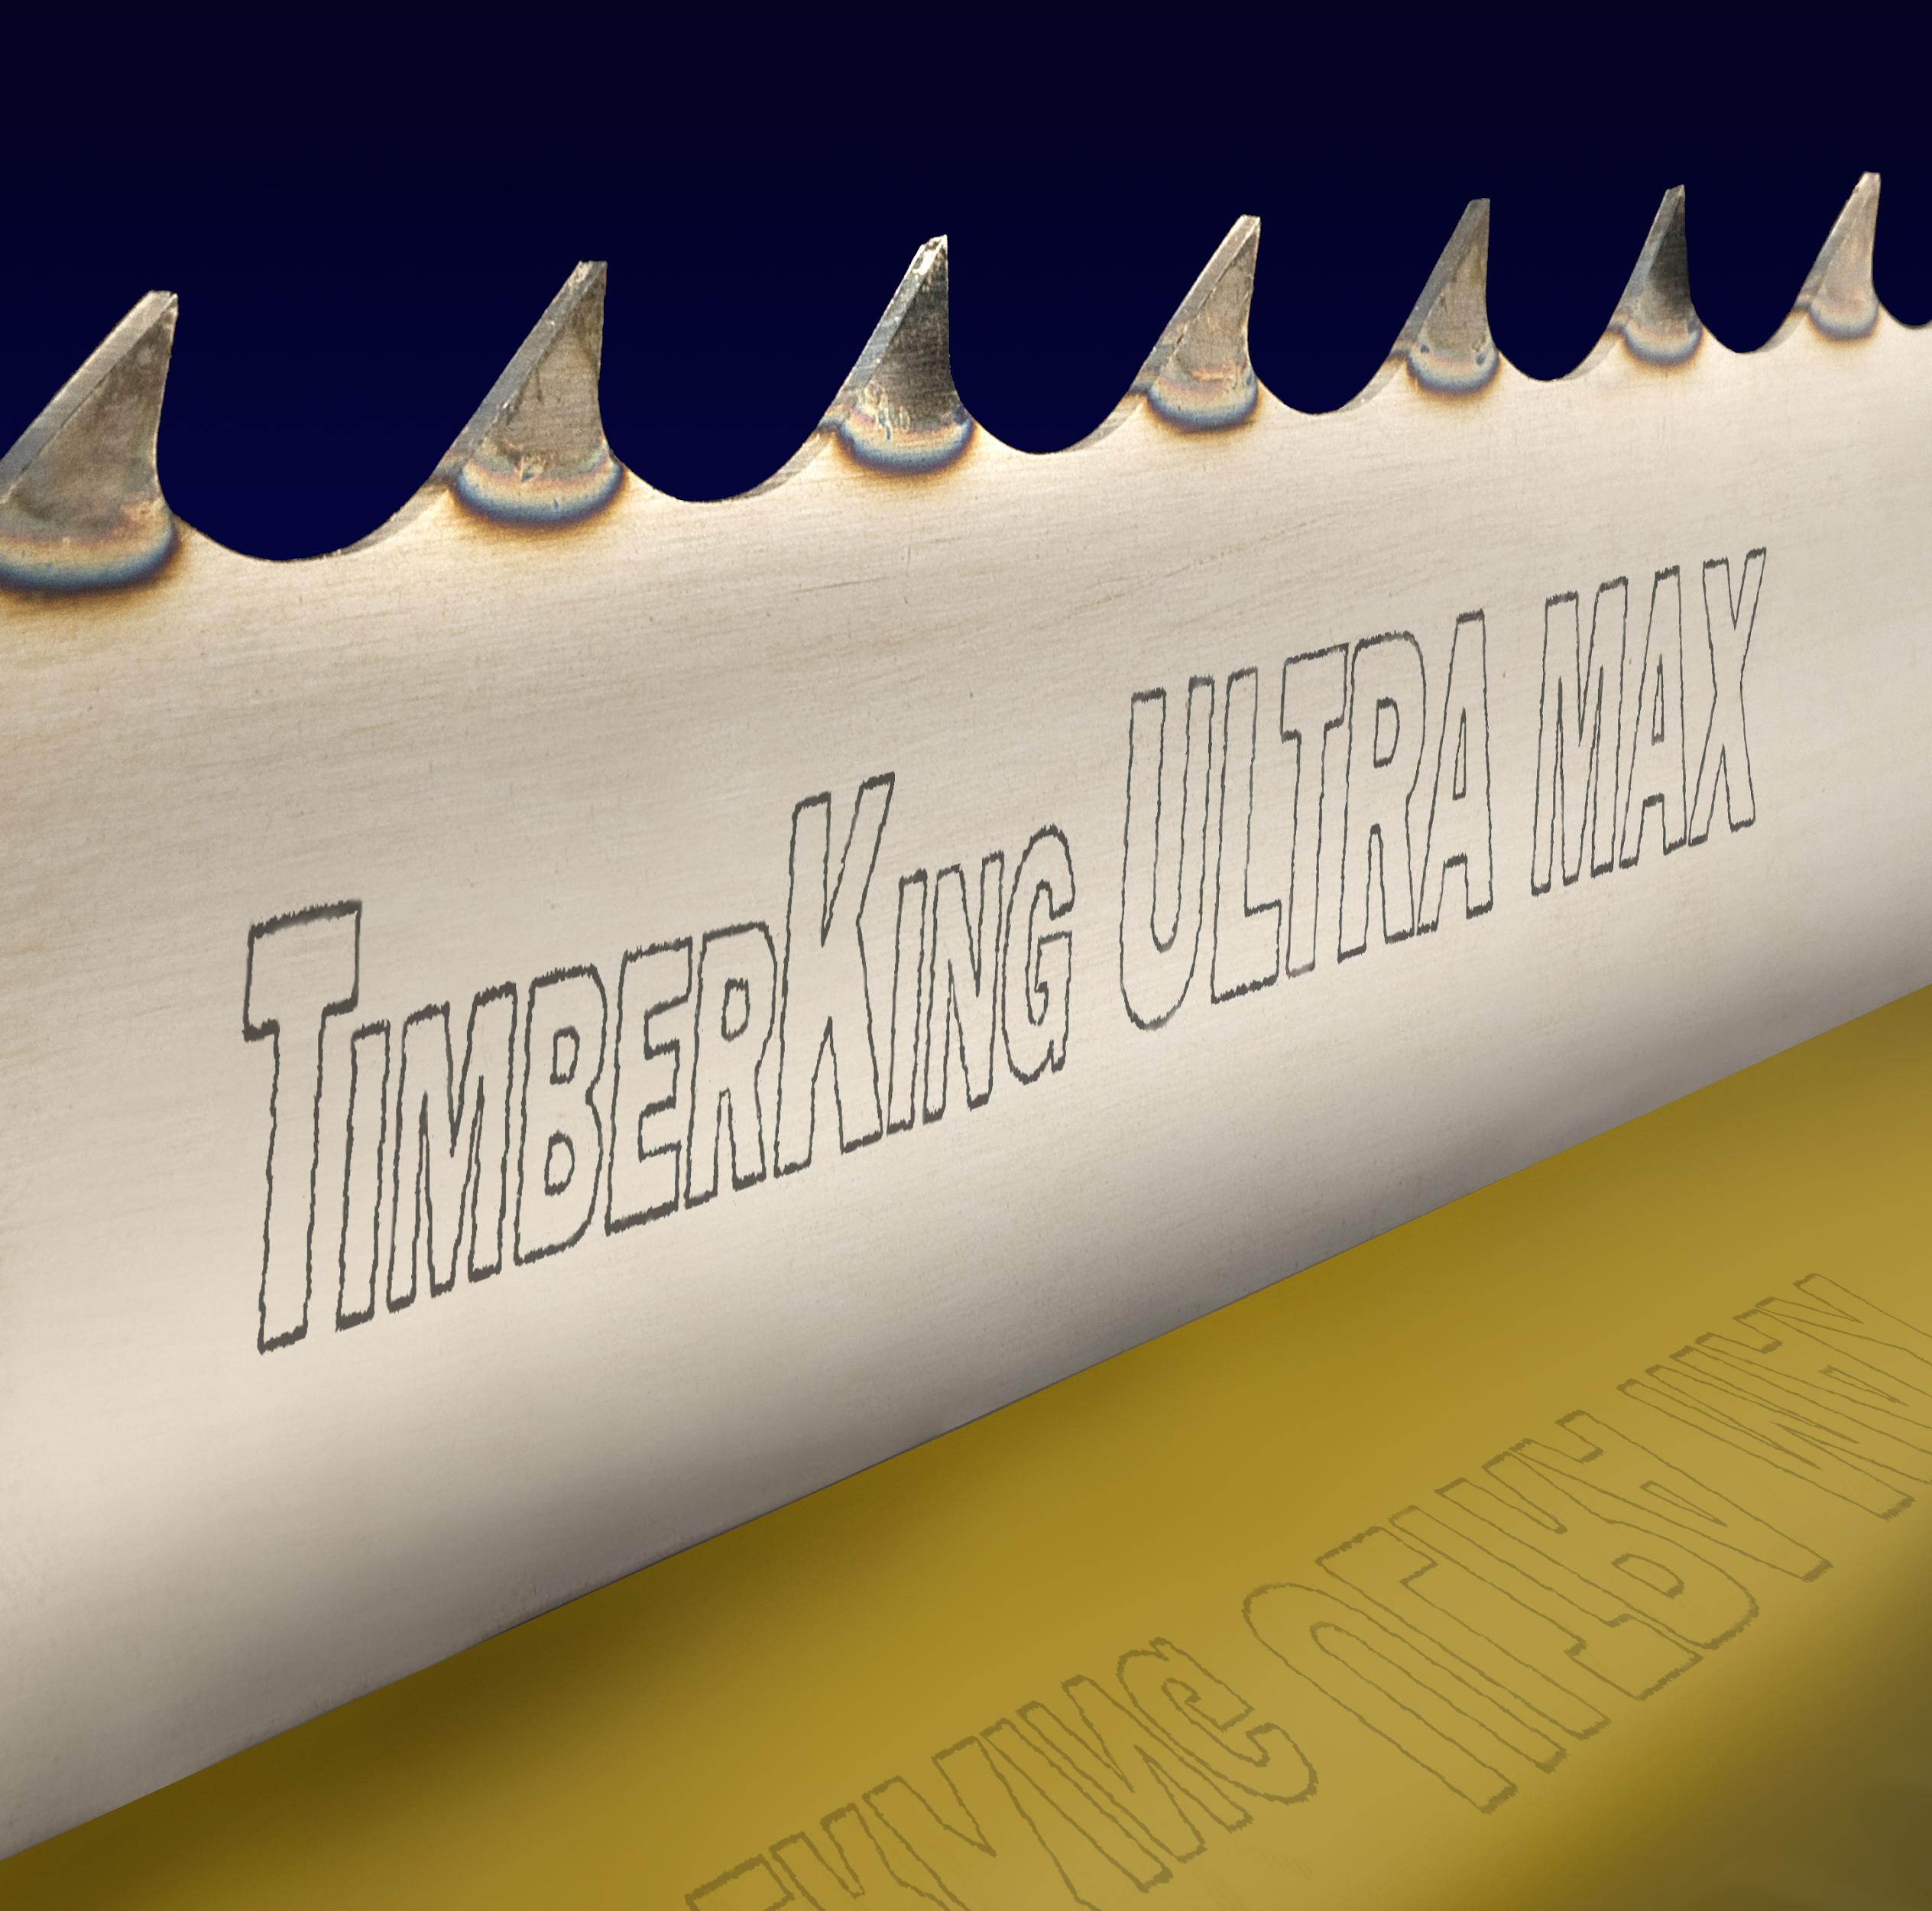 TimberKing Ultra MAX Blade